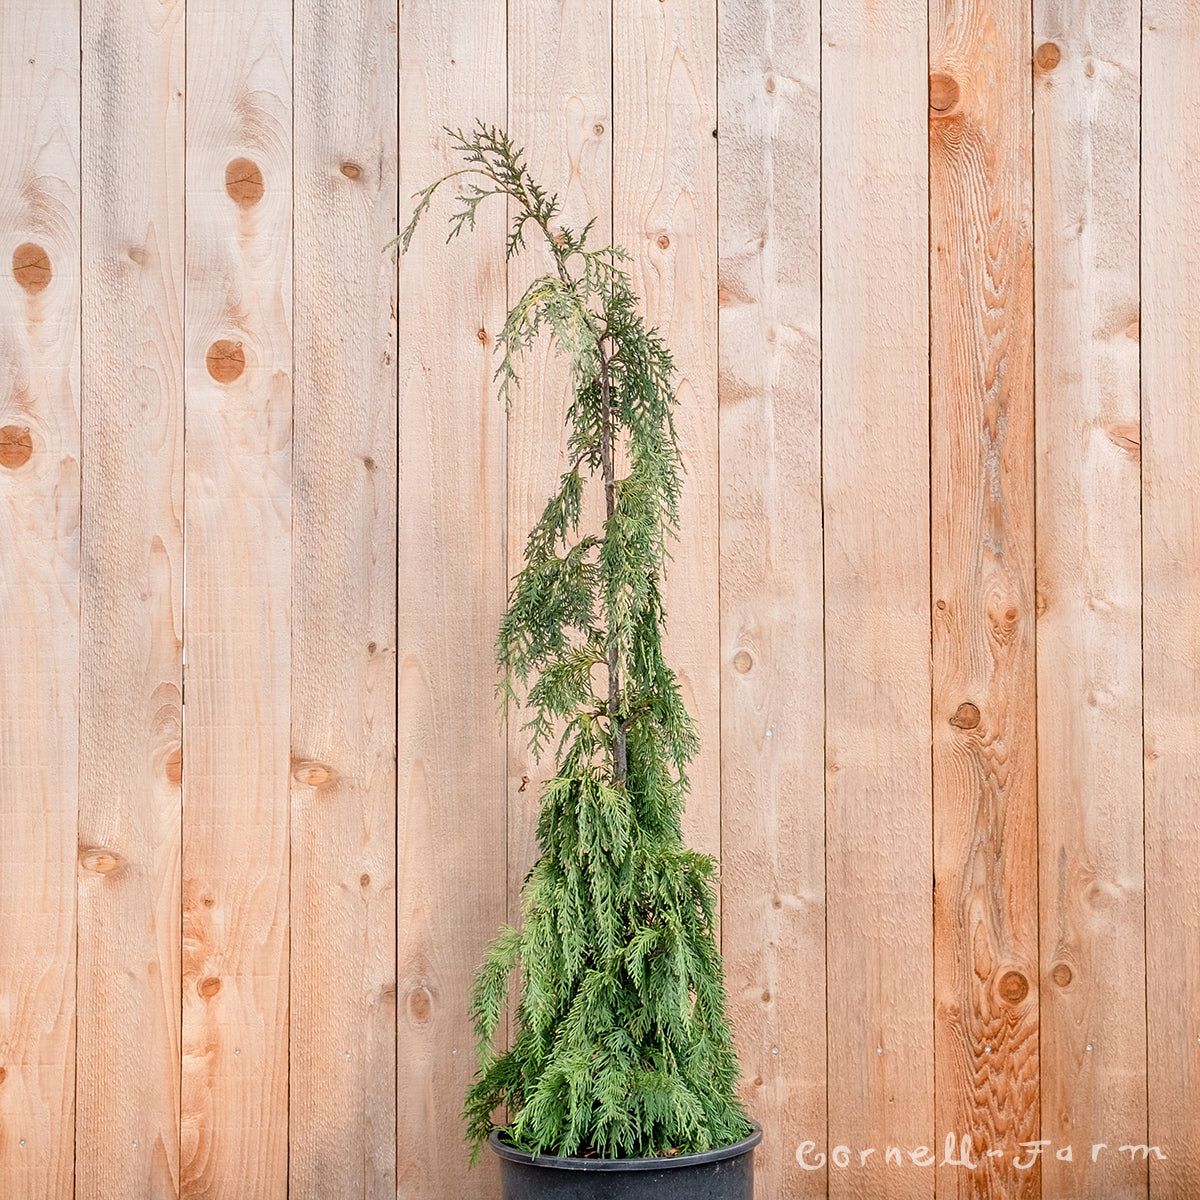 Chamaecyparis n. Green Arrow 6gal 3-4ft Weeping Alaskan Cedar